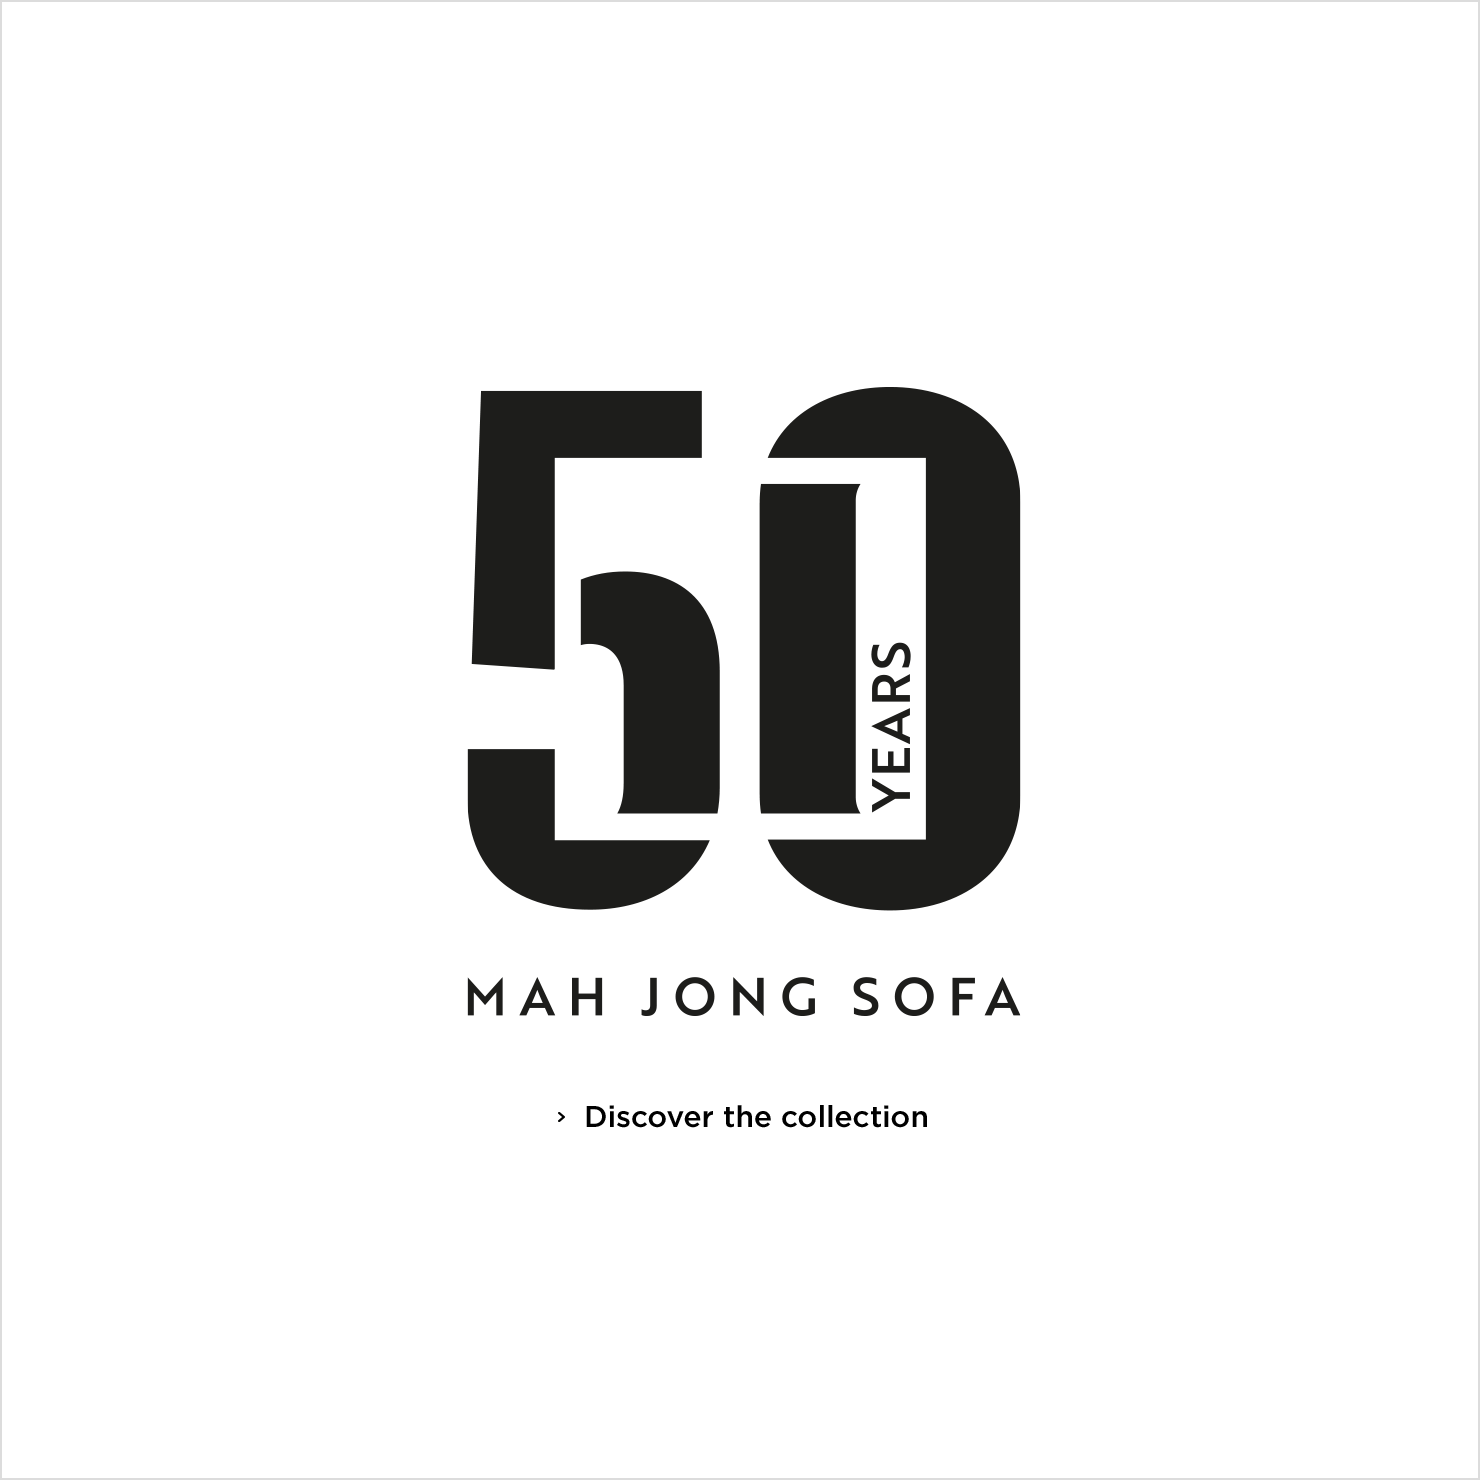 50 years of Mah Jong Sofa